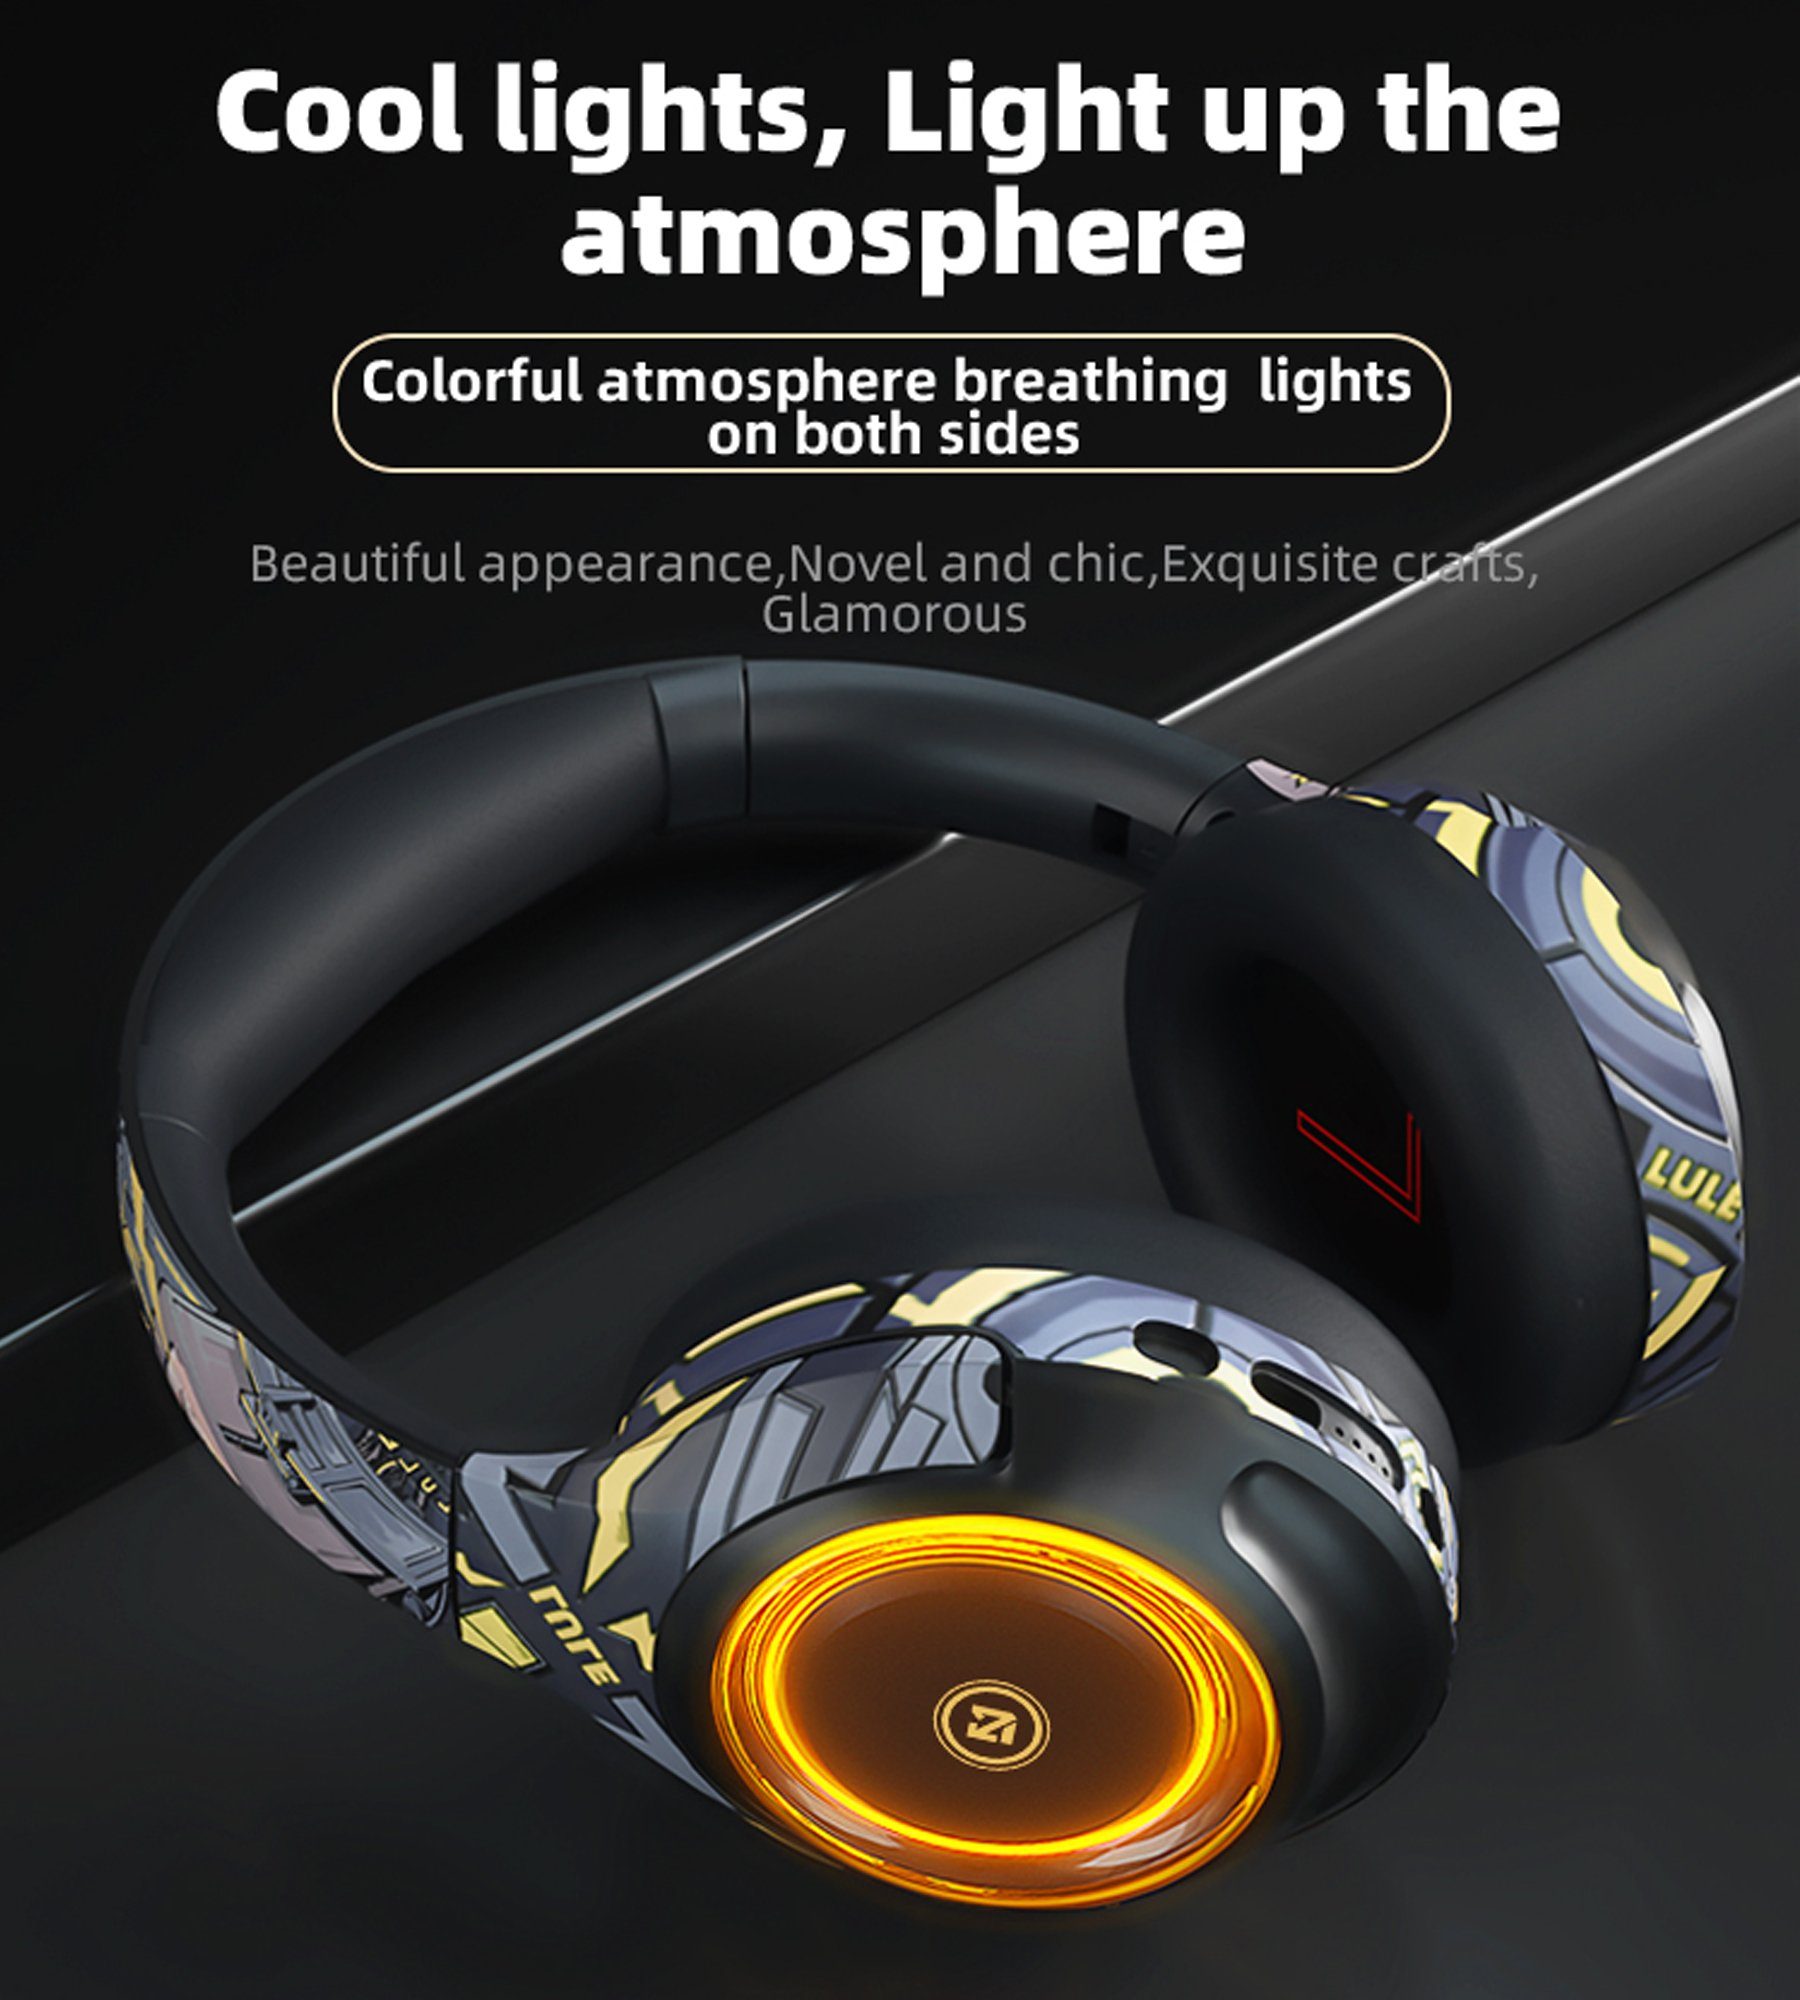 Mikrofon Ear-Kopfhörer 5.2, Atemlicht Stereo abnehmbar,RGB Gaming-Headset,Over Mutoy (Bluetooth Bluetooth Gaming-Headset mit Headset,Faltbare, Wireless) Noise-Cancelling,Hi-Fi